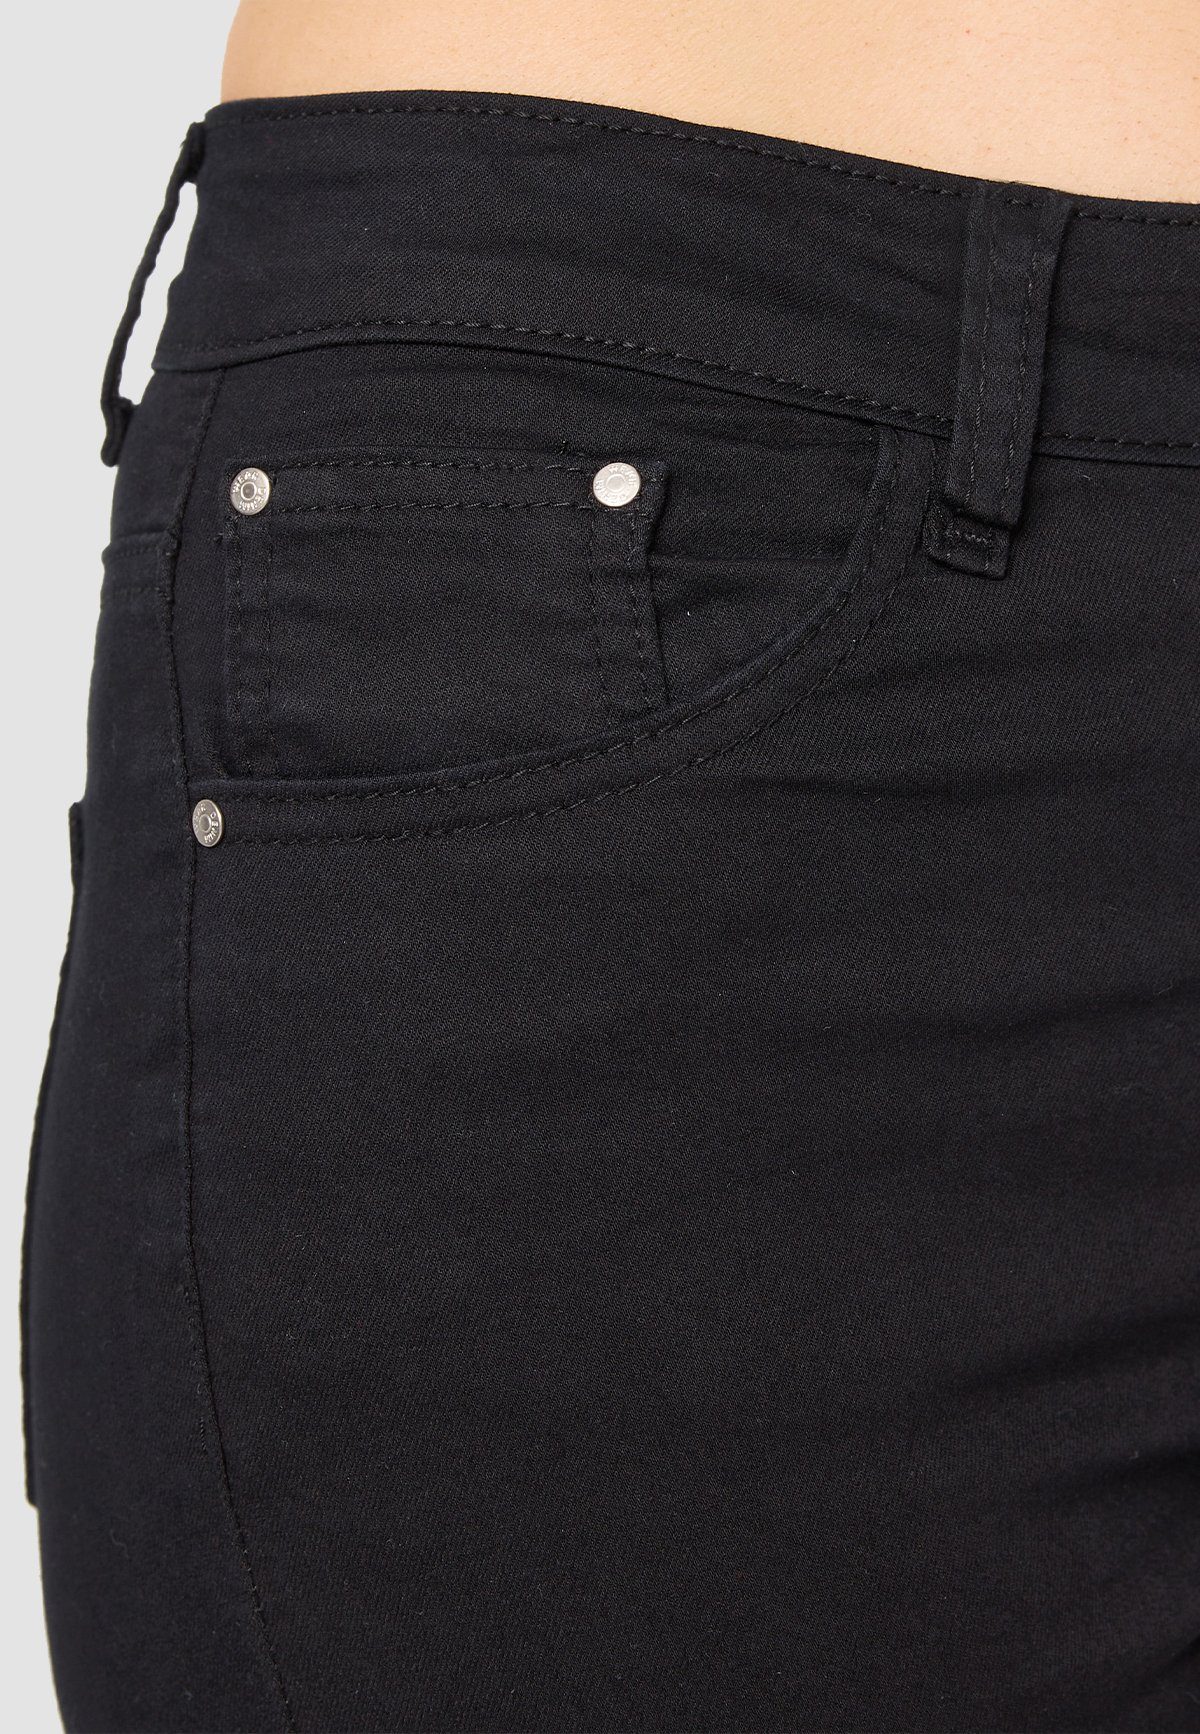 MiSS RJ Jeans Shorts 5413 in Schwarz Capri Caprihose mit Spitze